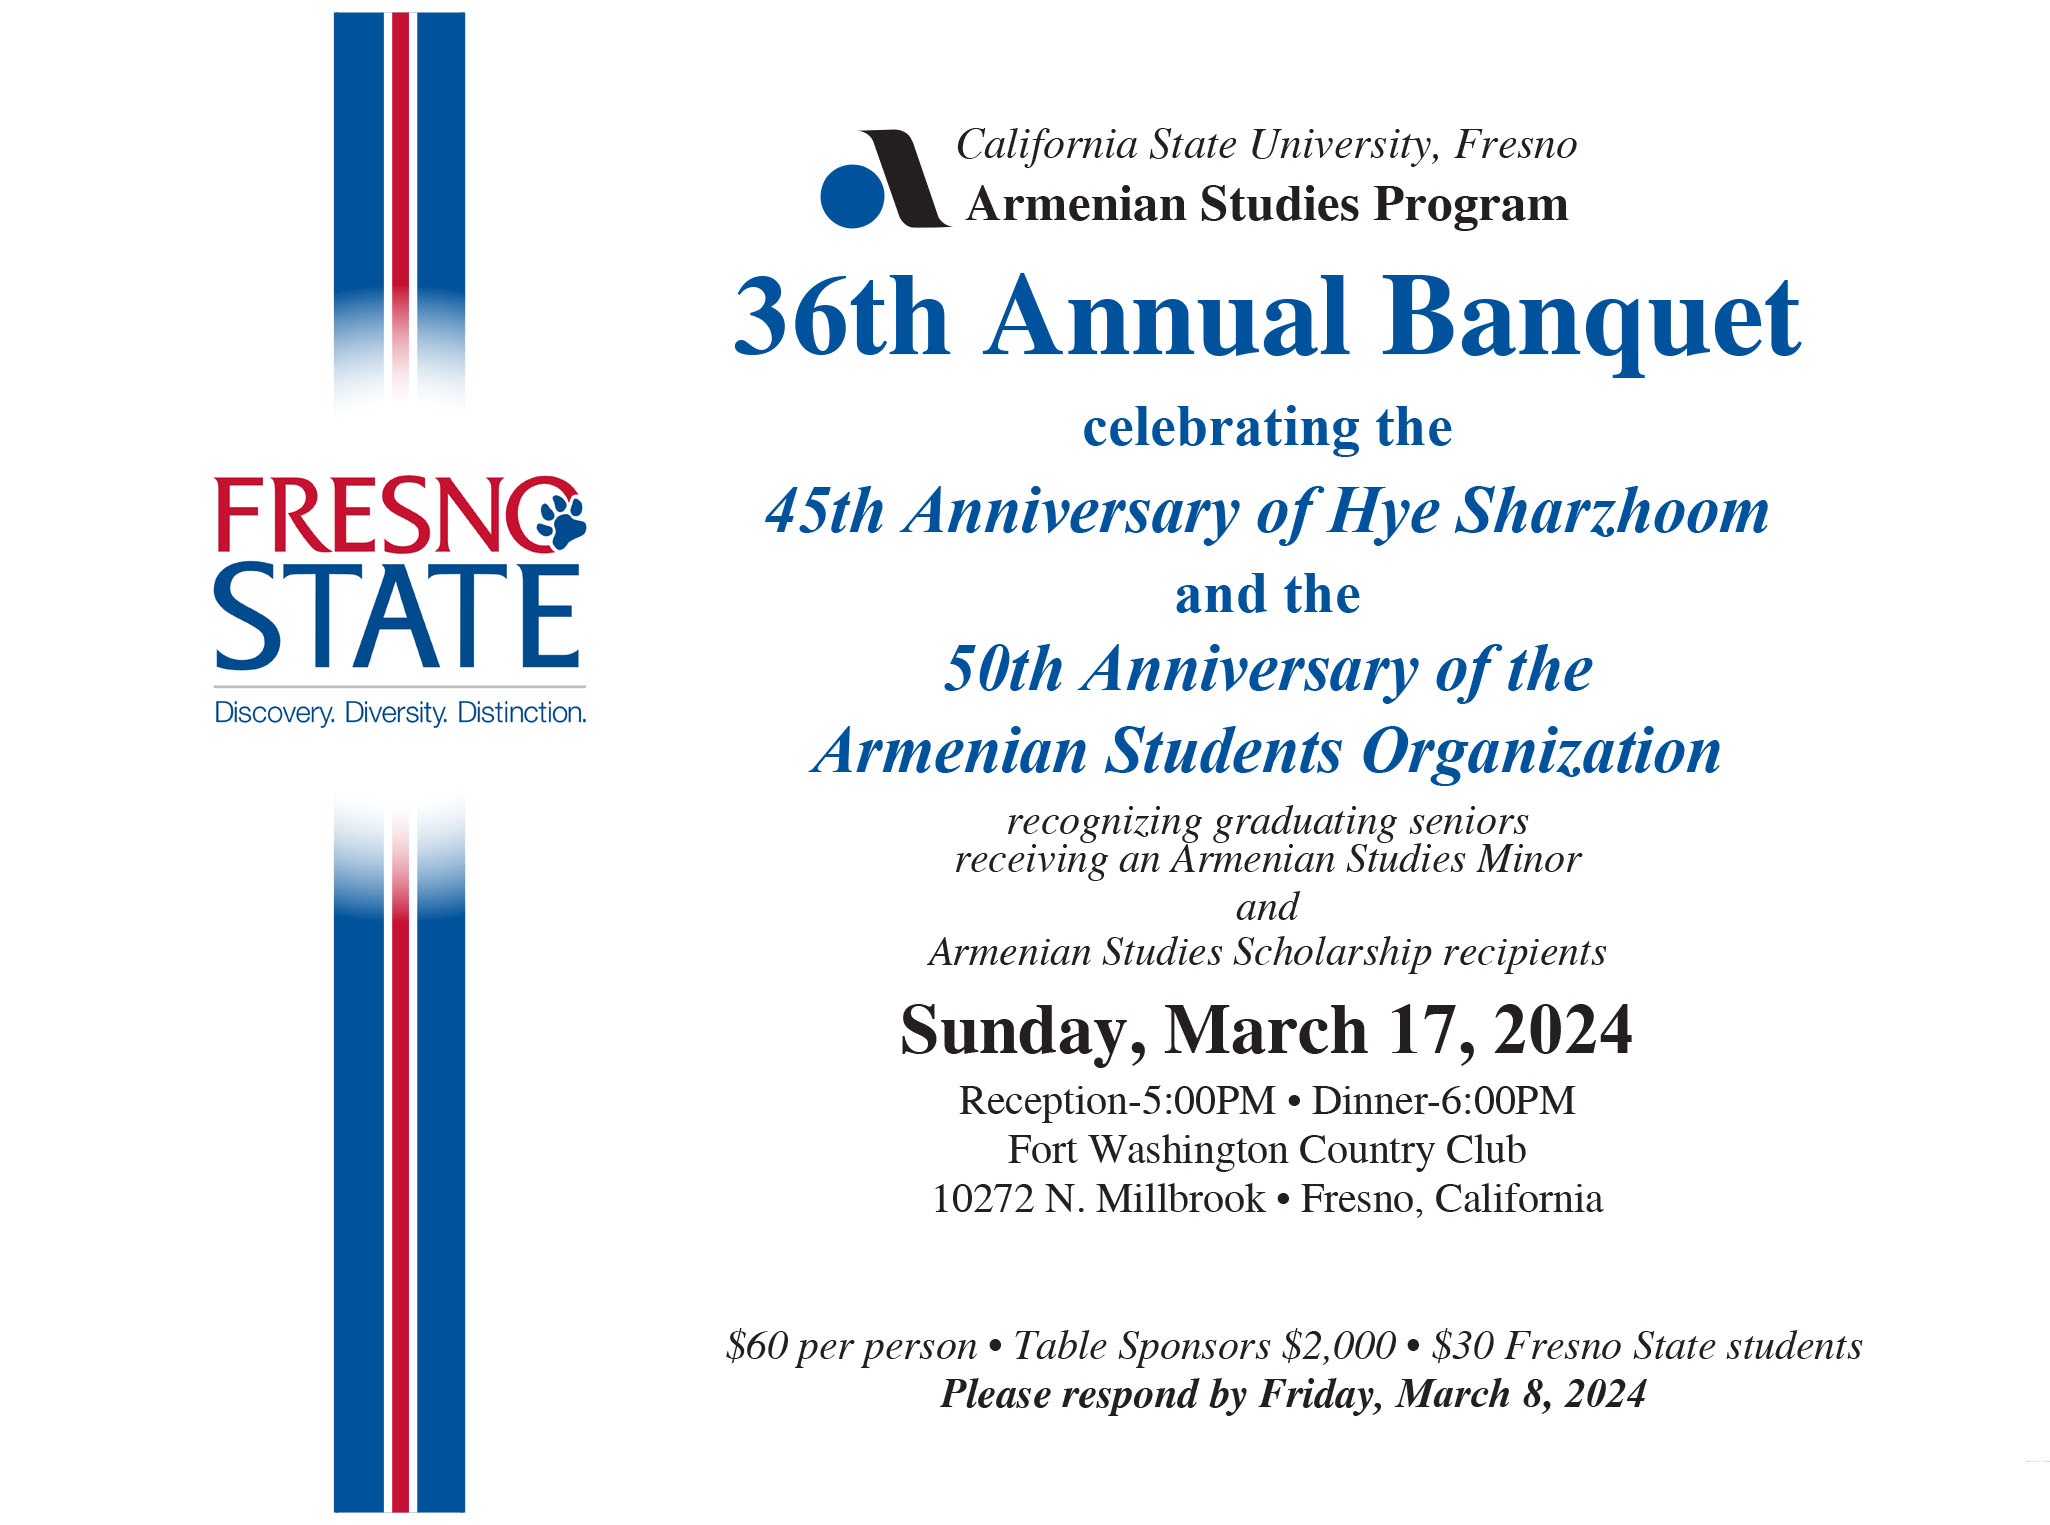 Armenian Studies Program Banquet